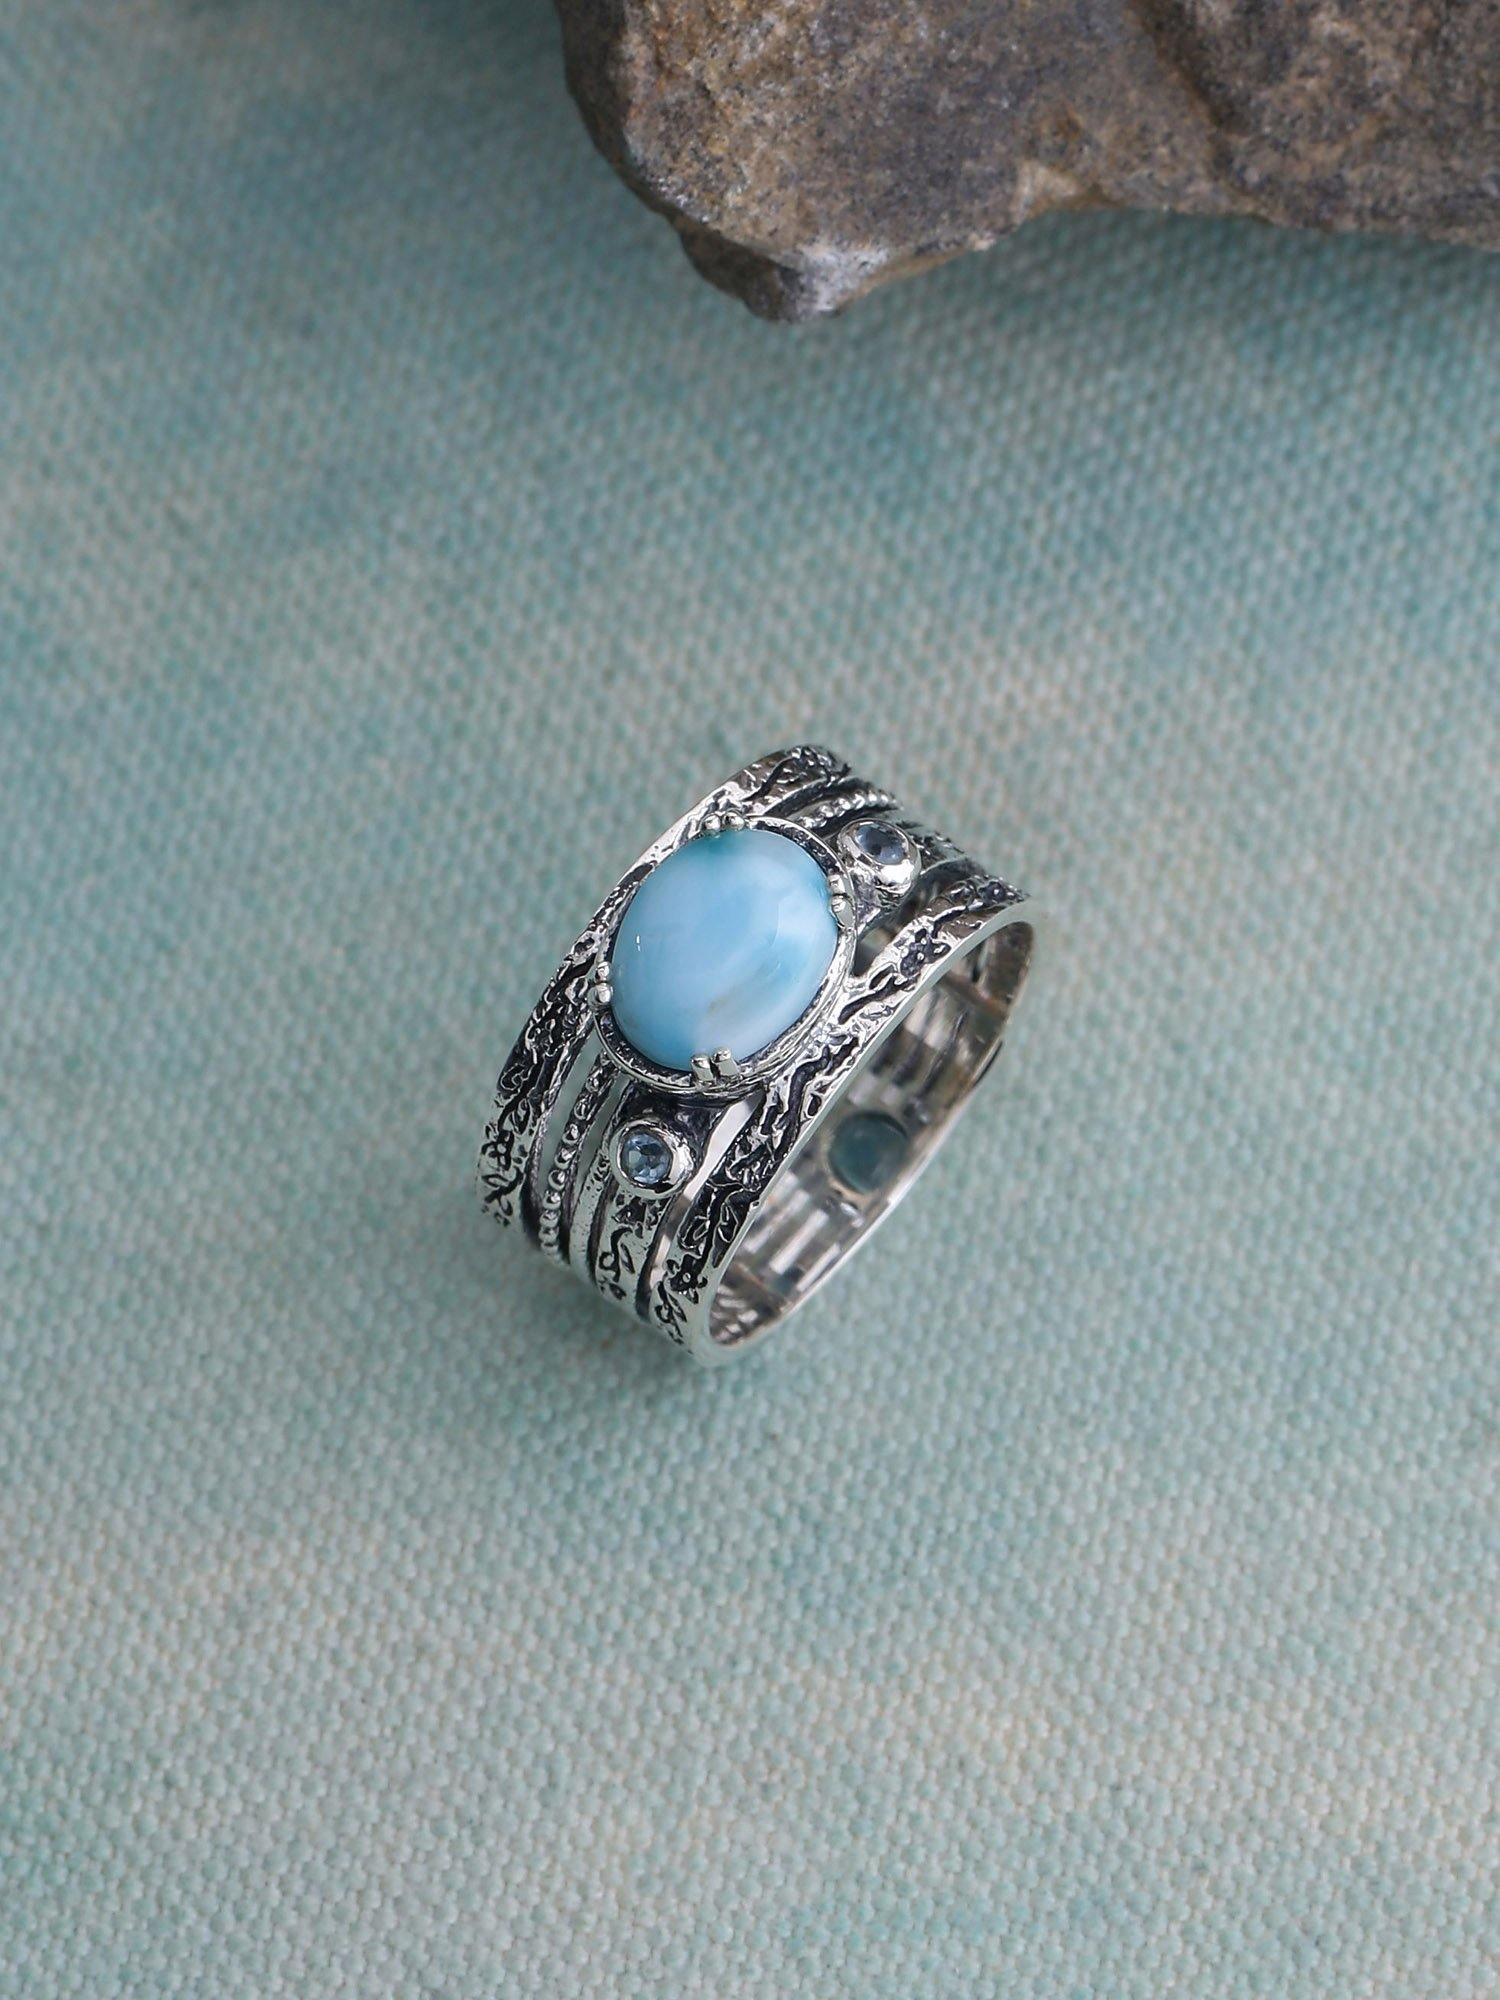 Larimar Swiss Blue Topaz Solid 925 Sterling Silver Designer Ring Jewelry - YoTreasure